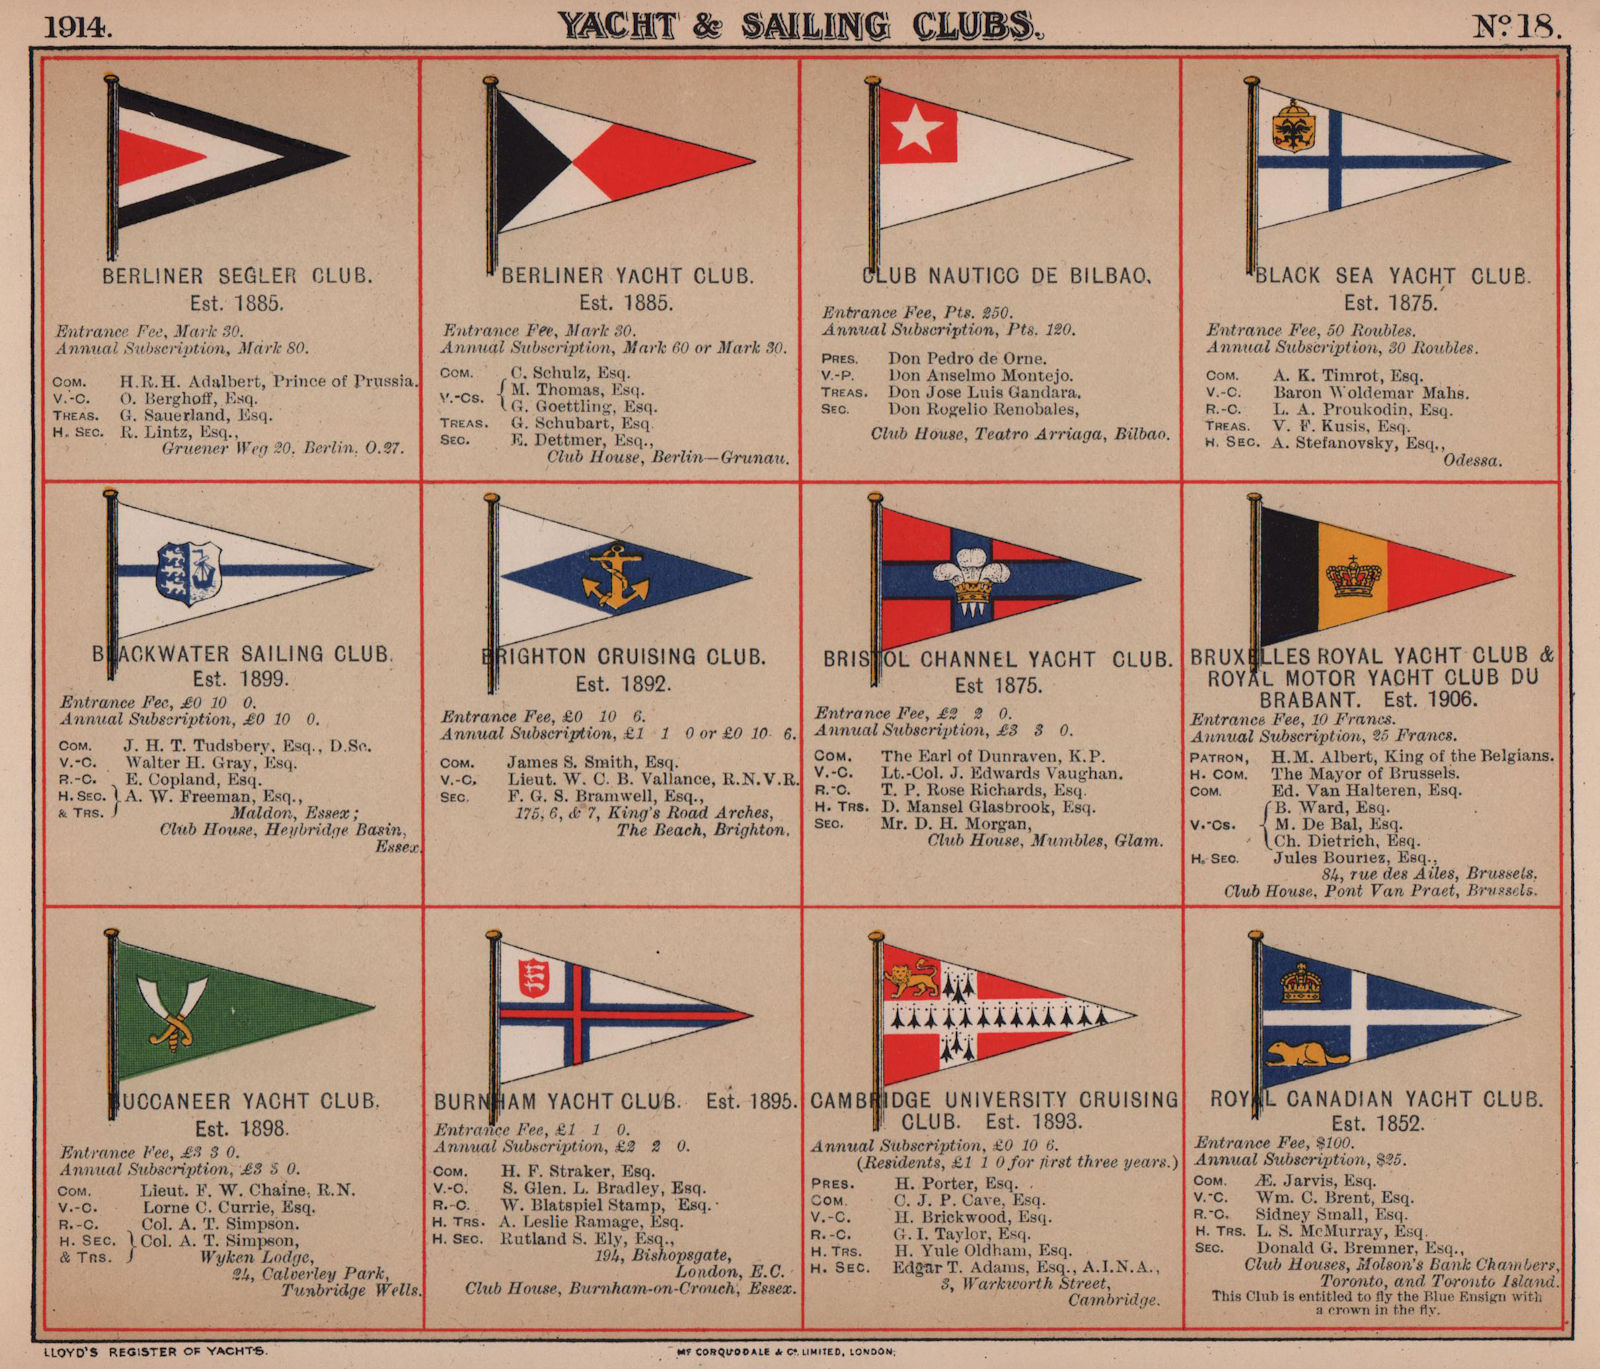 YACHT & SAILING CLUB FLAGS B-C Bilbao Bristol Channel Brabant Buccaneer 1914